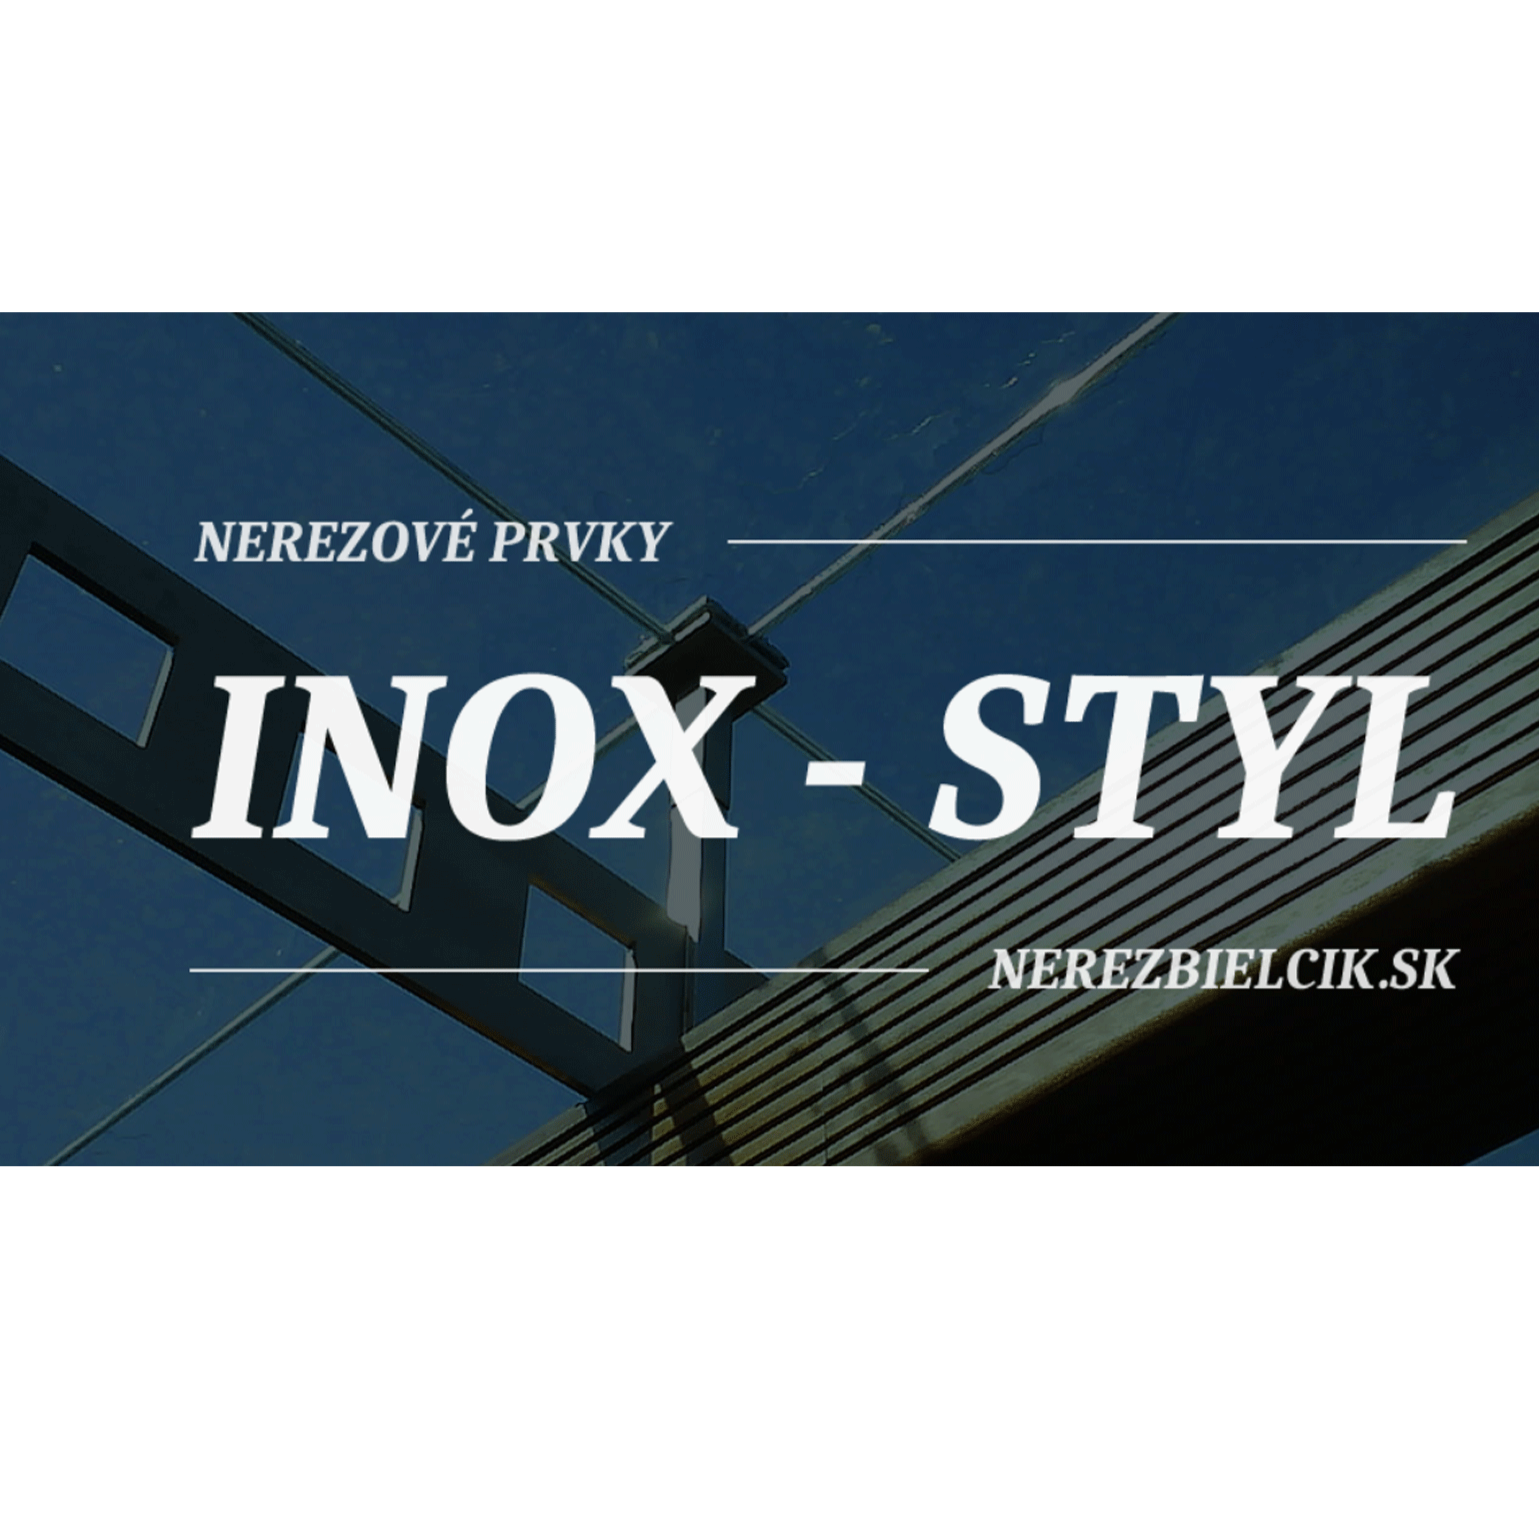 INOX - STYL MYJAVA, s.r.o.